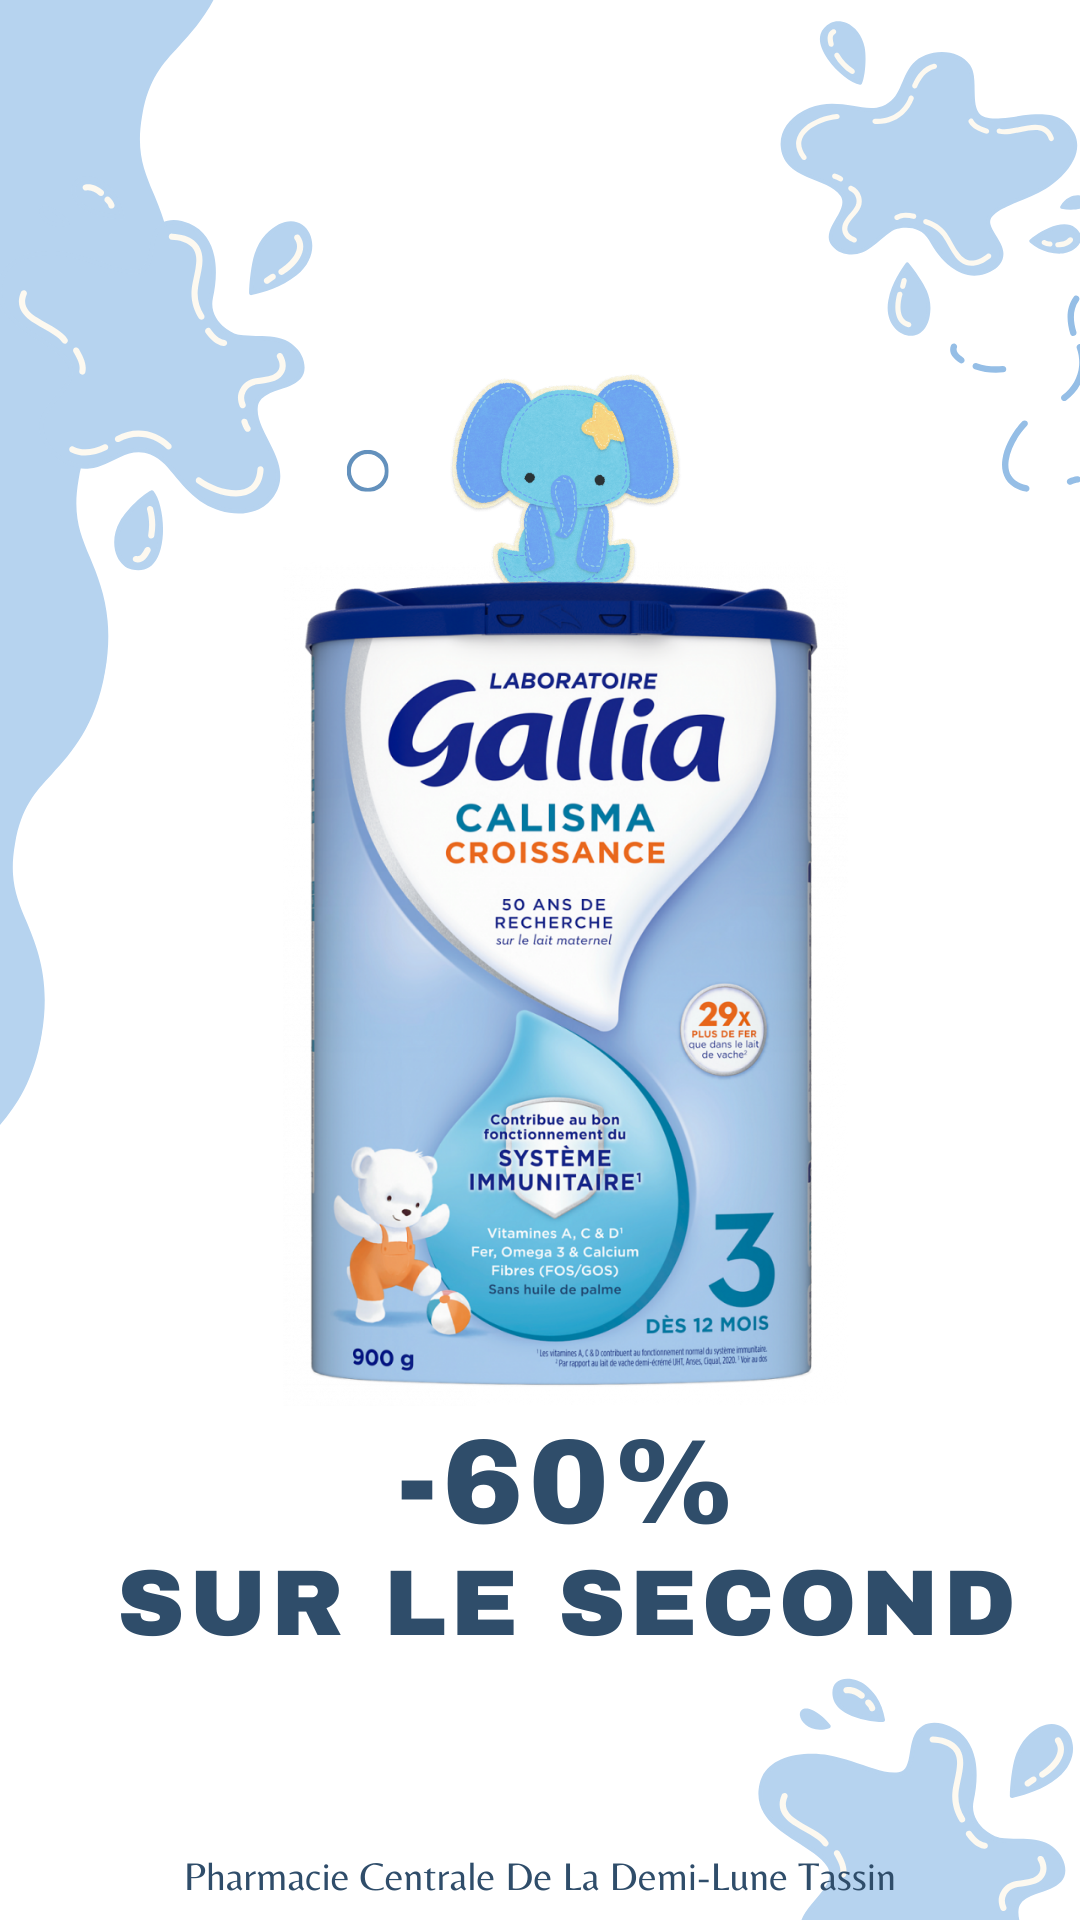 Gallia Calisma croissance